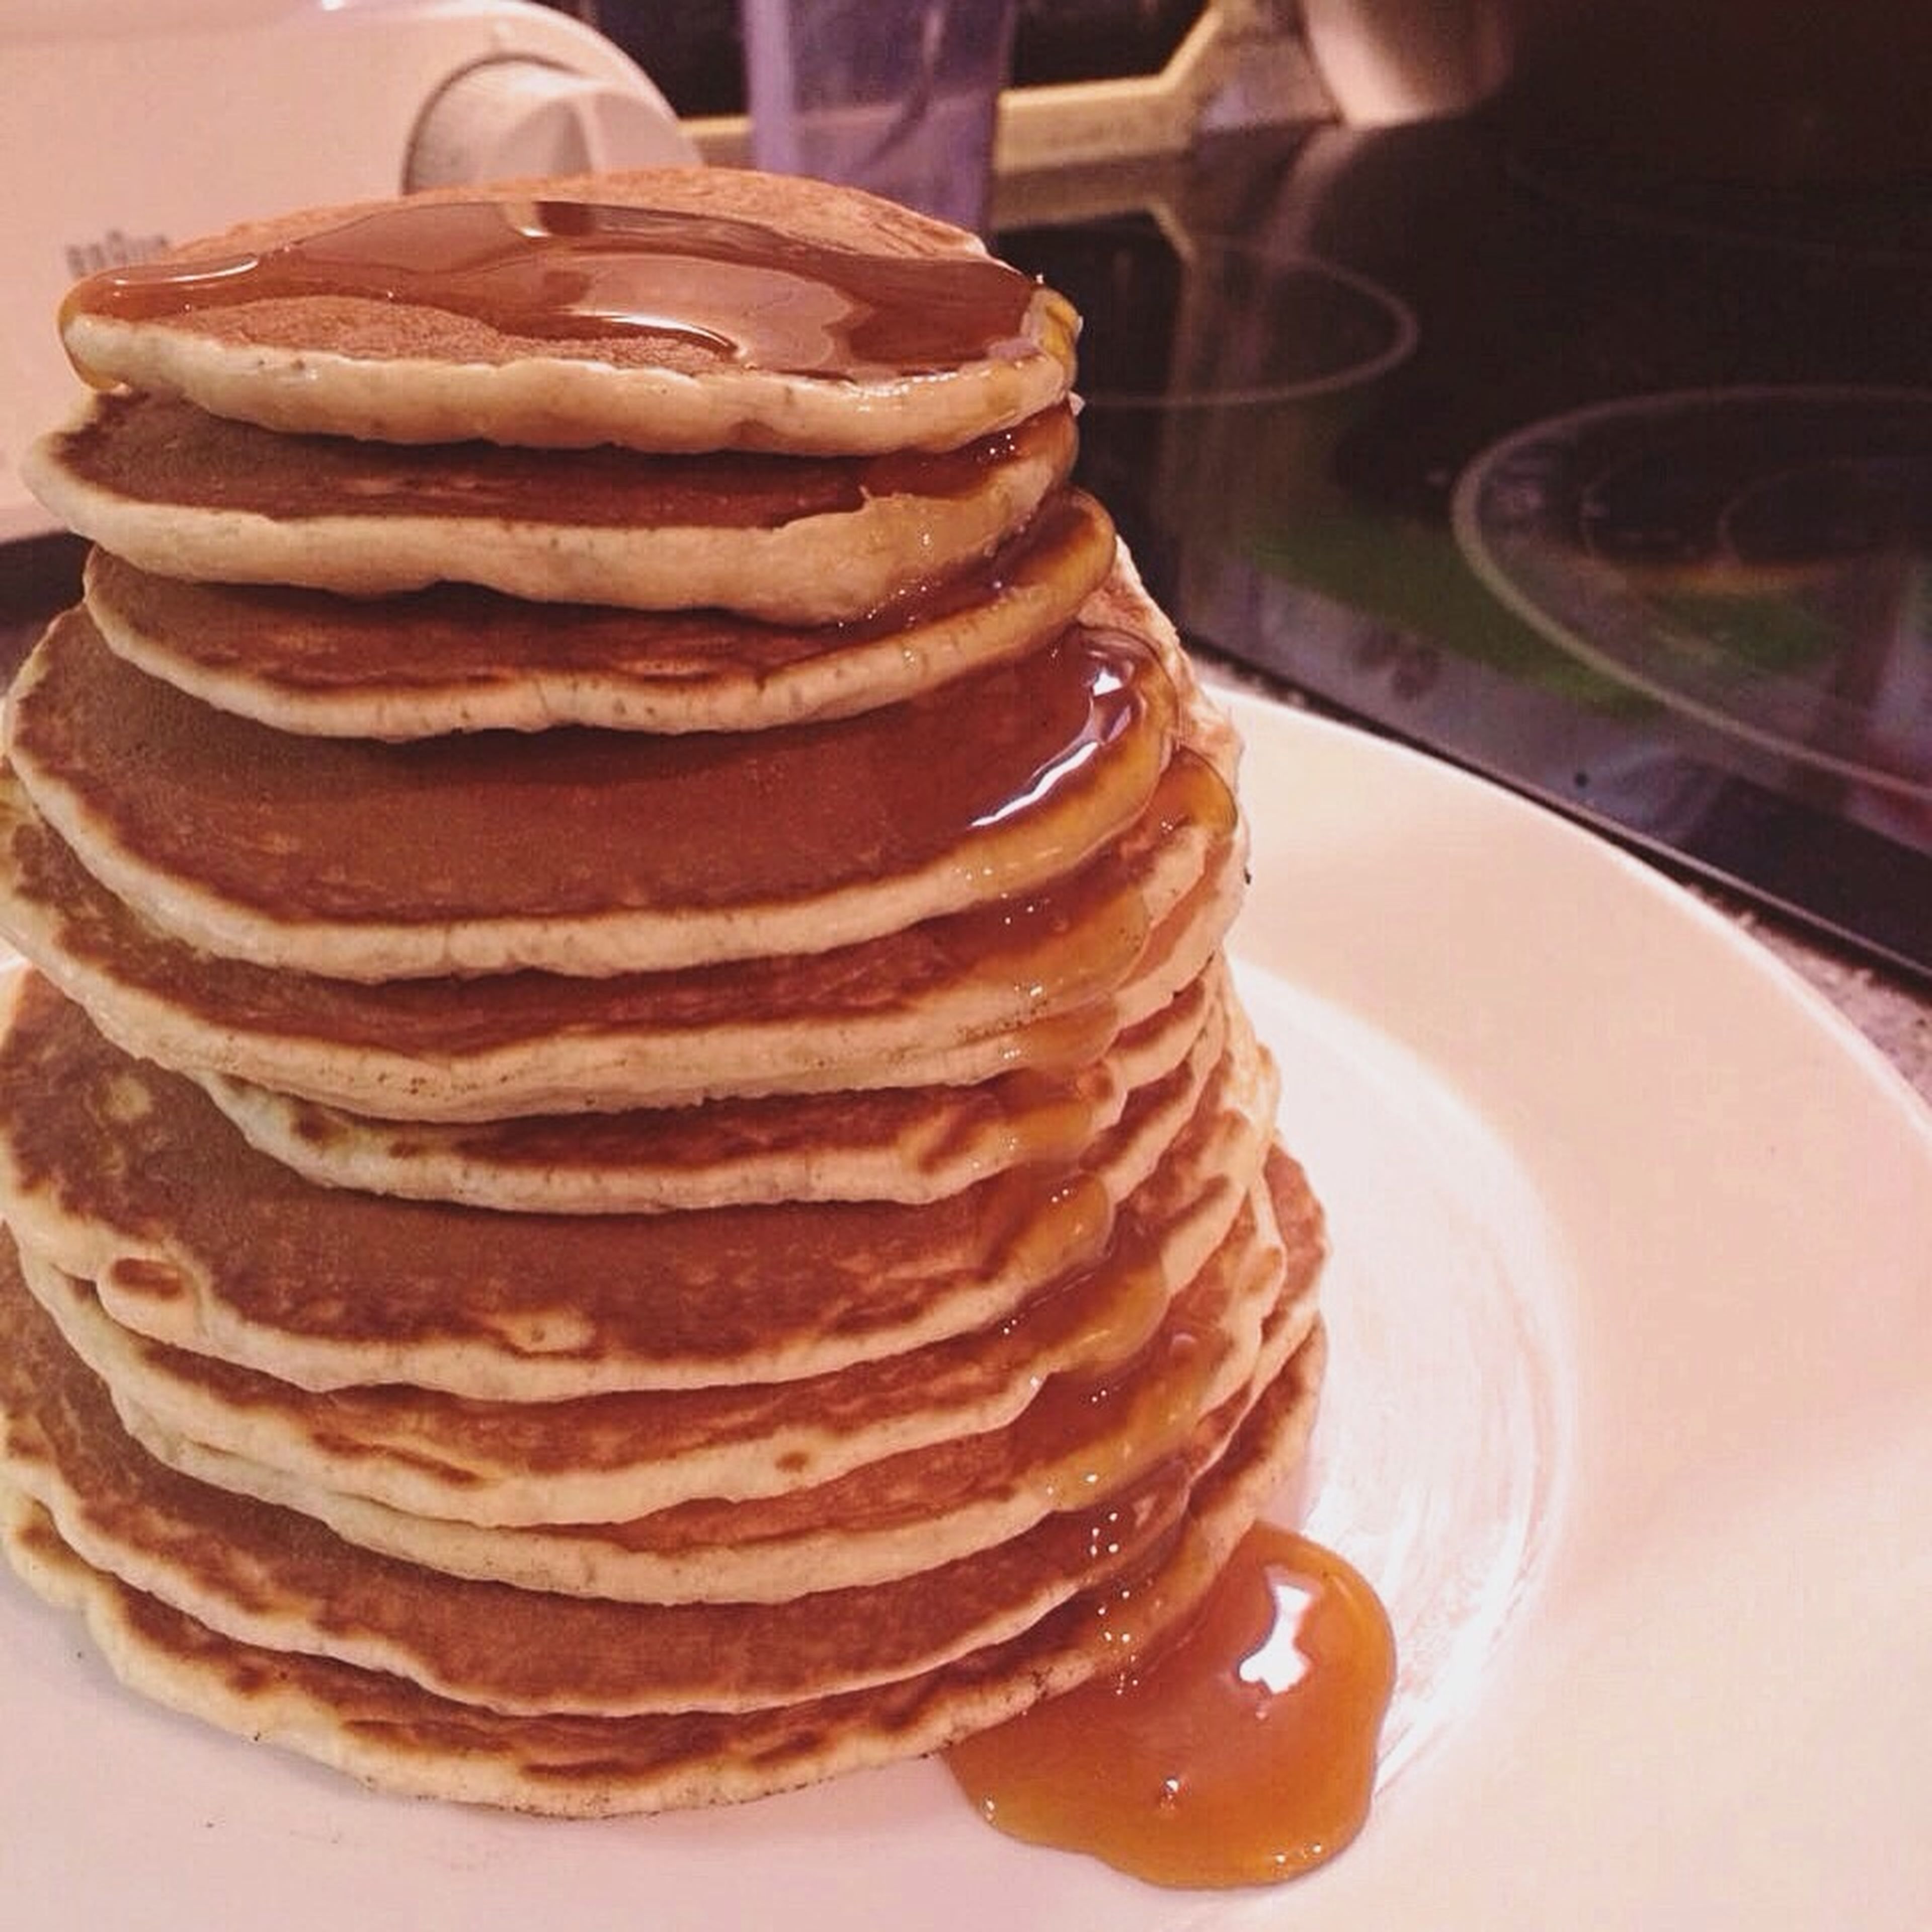 All-American pancakes